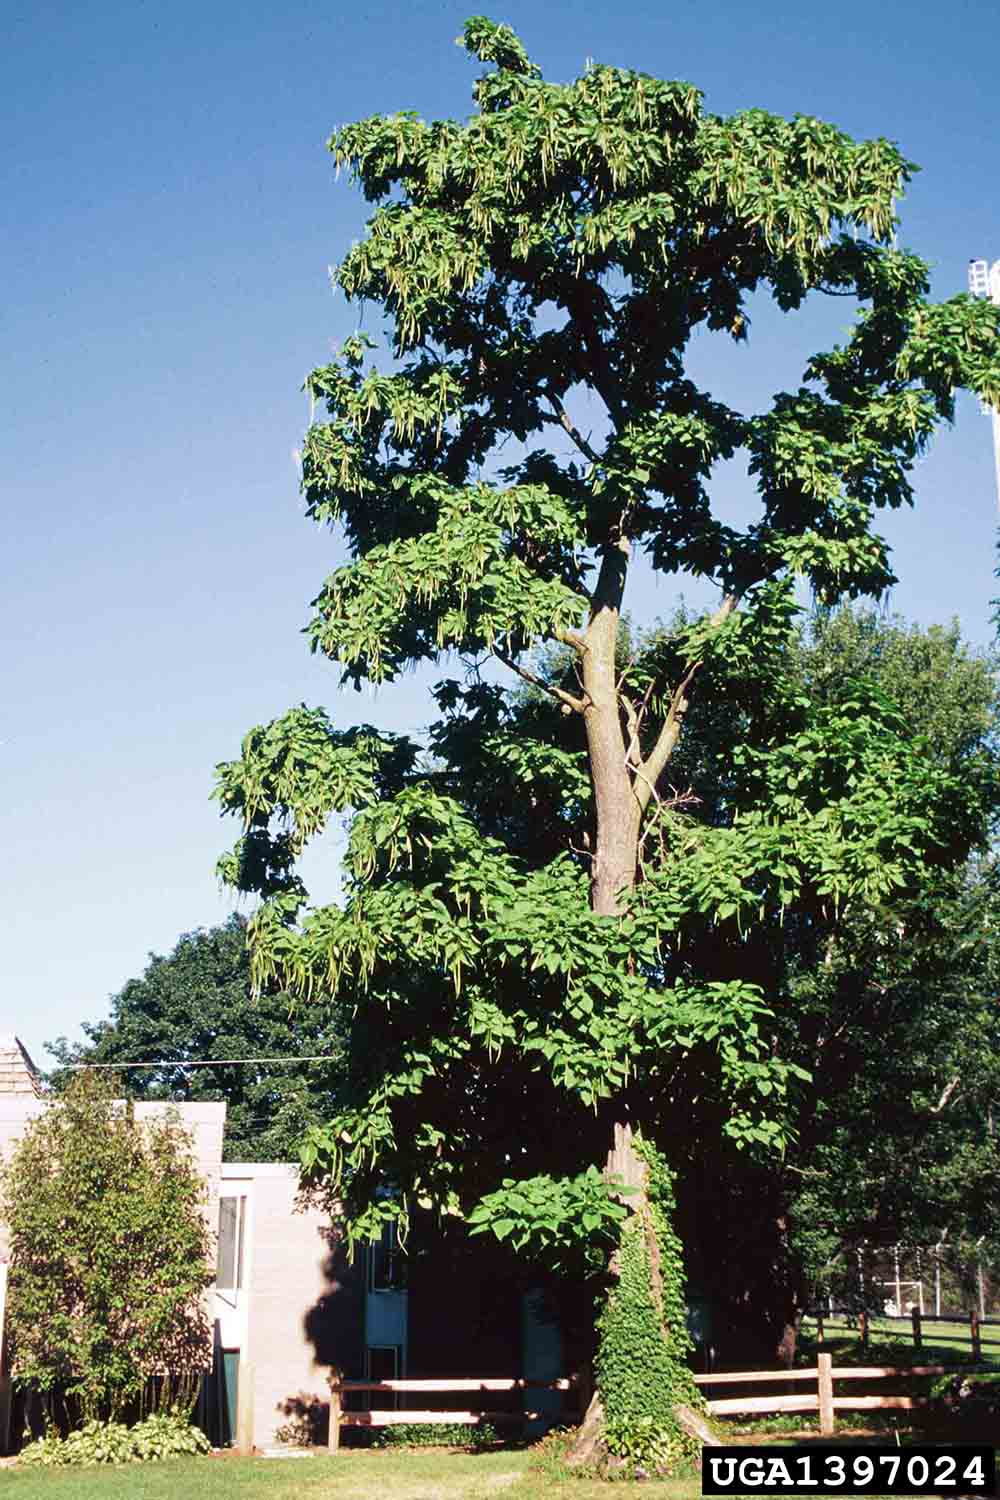 Southern catalpa tree habit